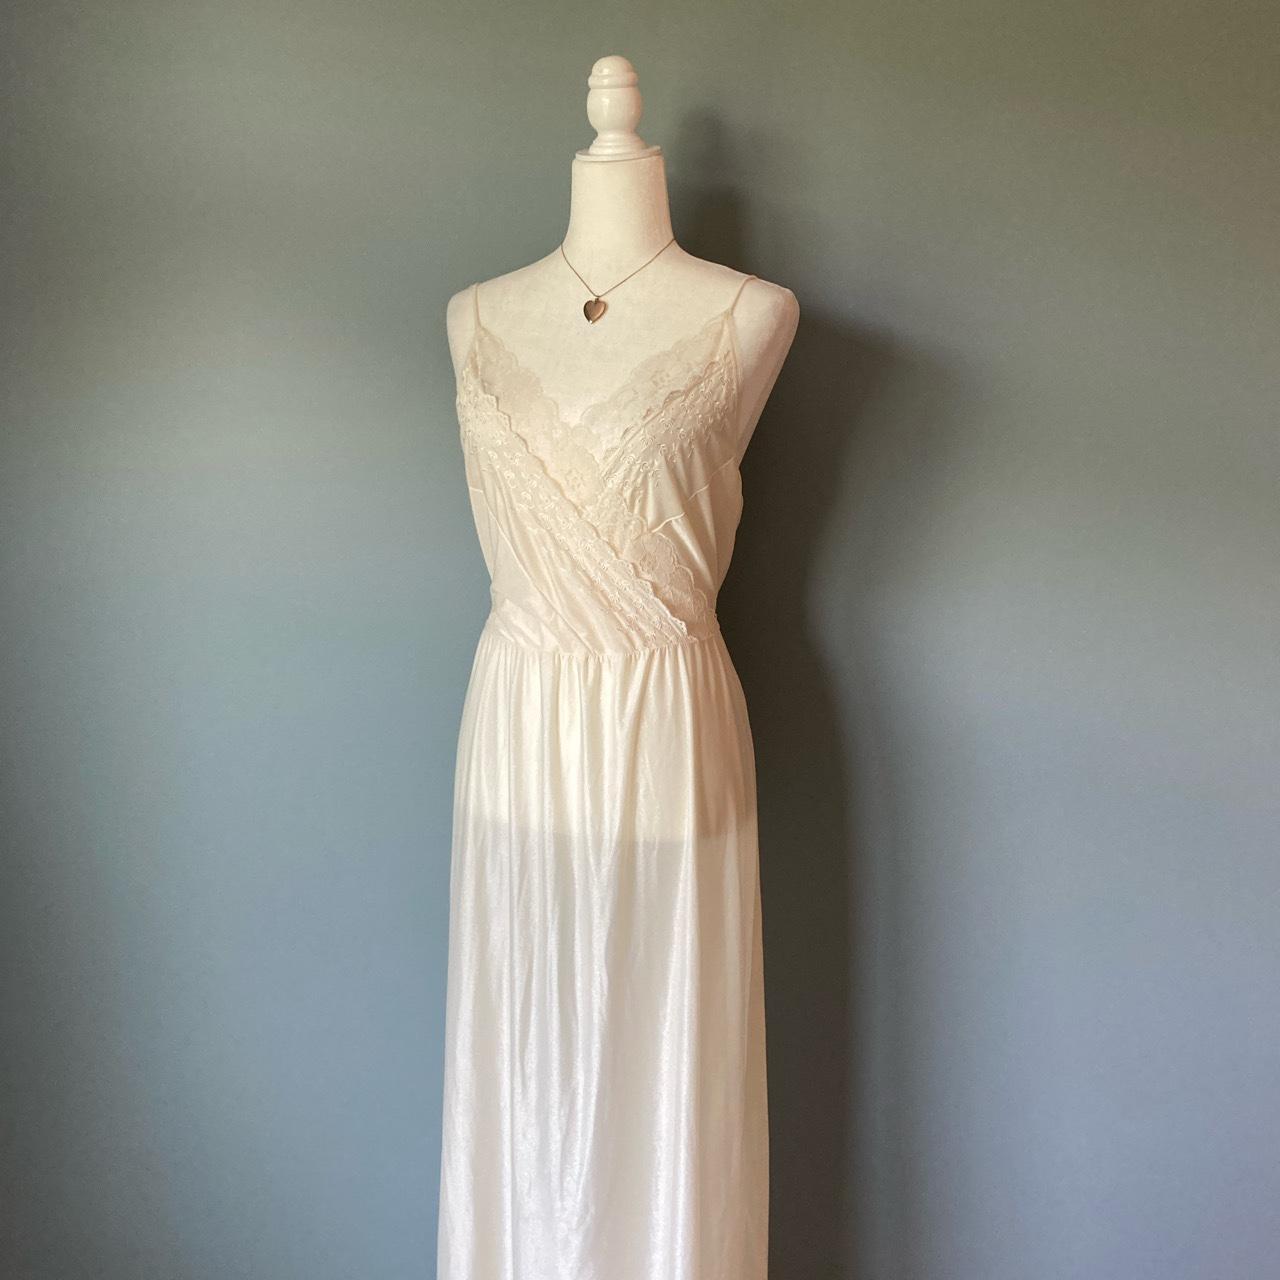 70s Vintage Slip Dress White 100% Nylon Lace Maxi... - Depop